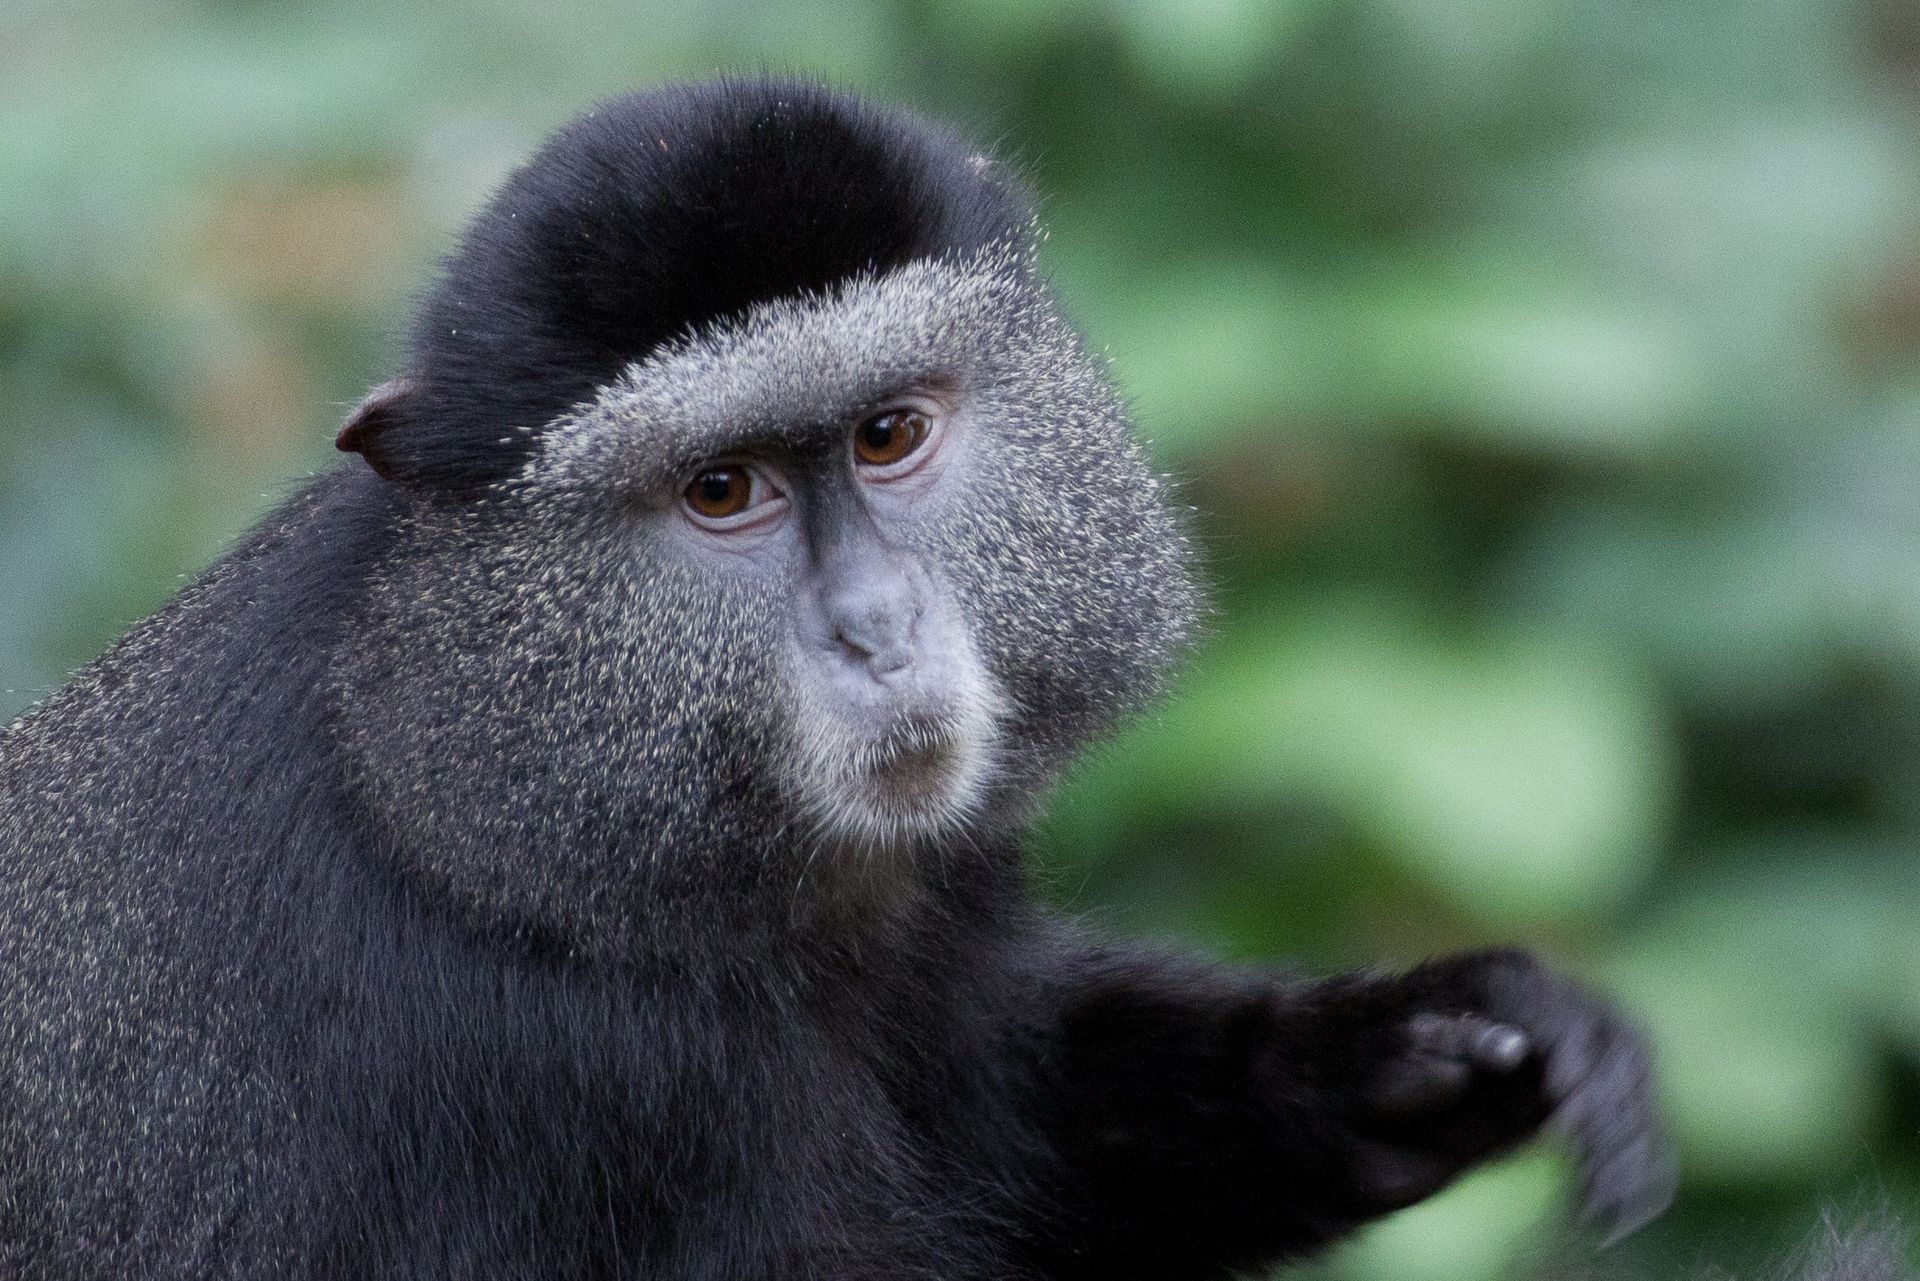 An image of a black monkey.